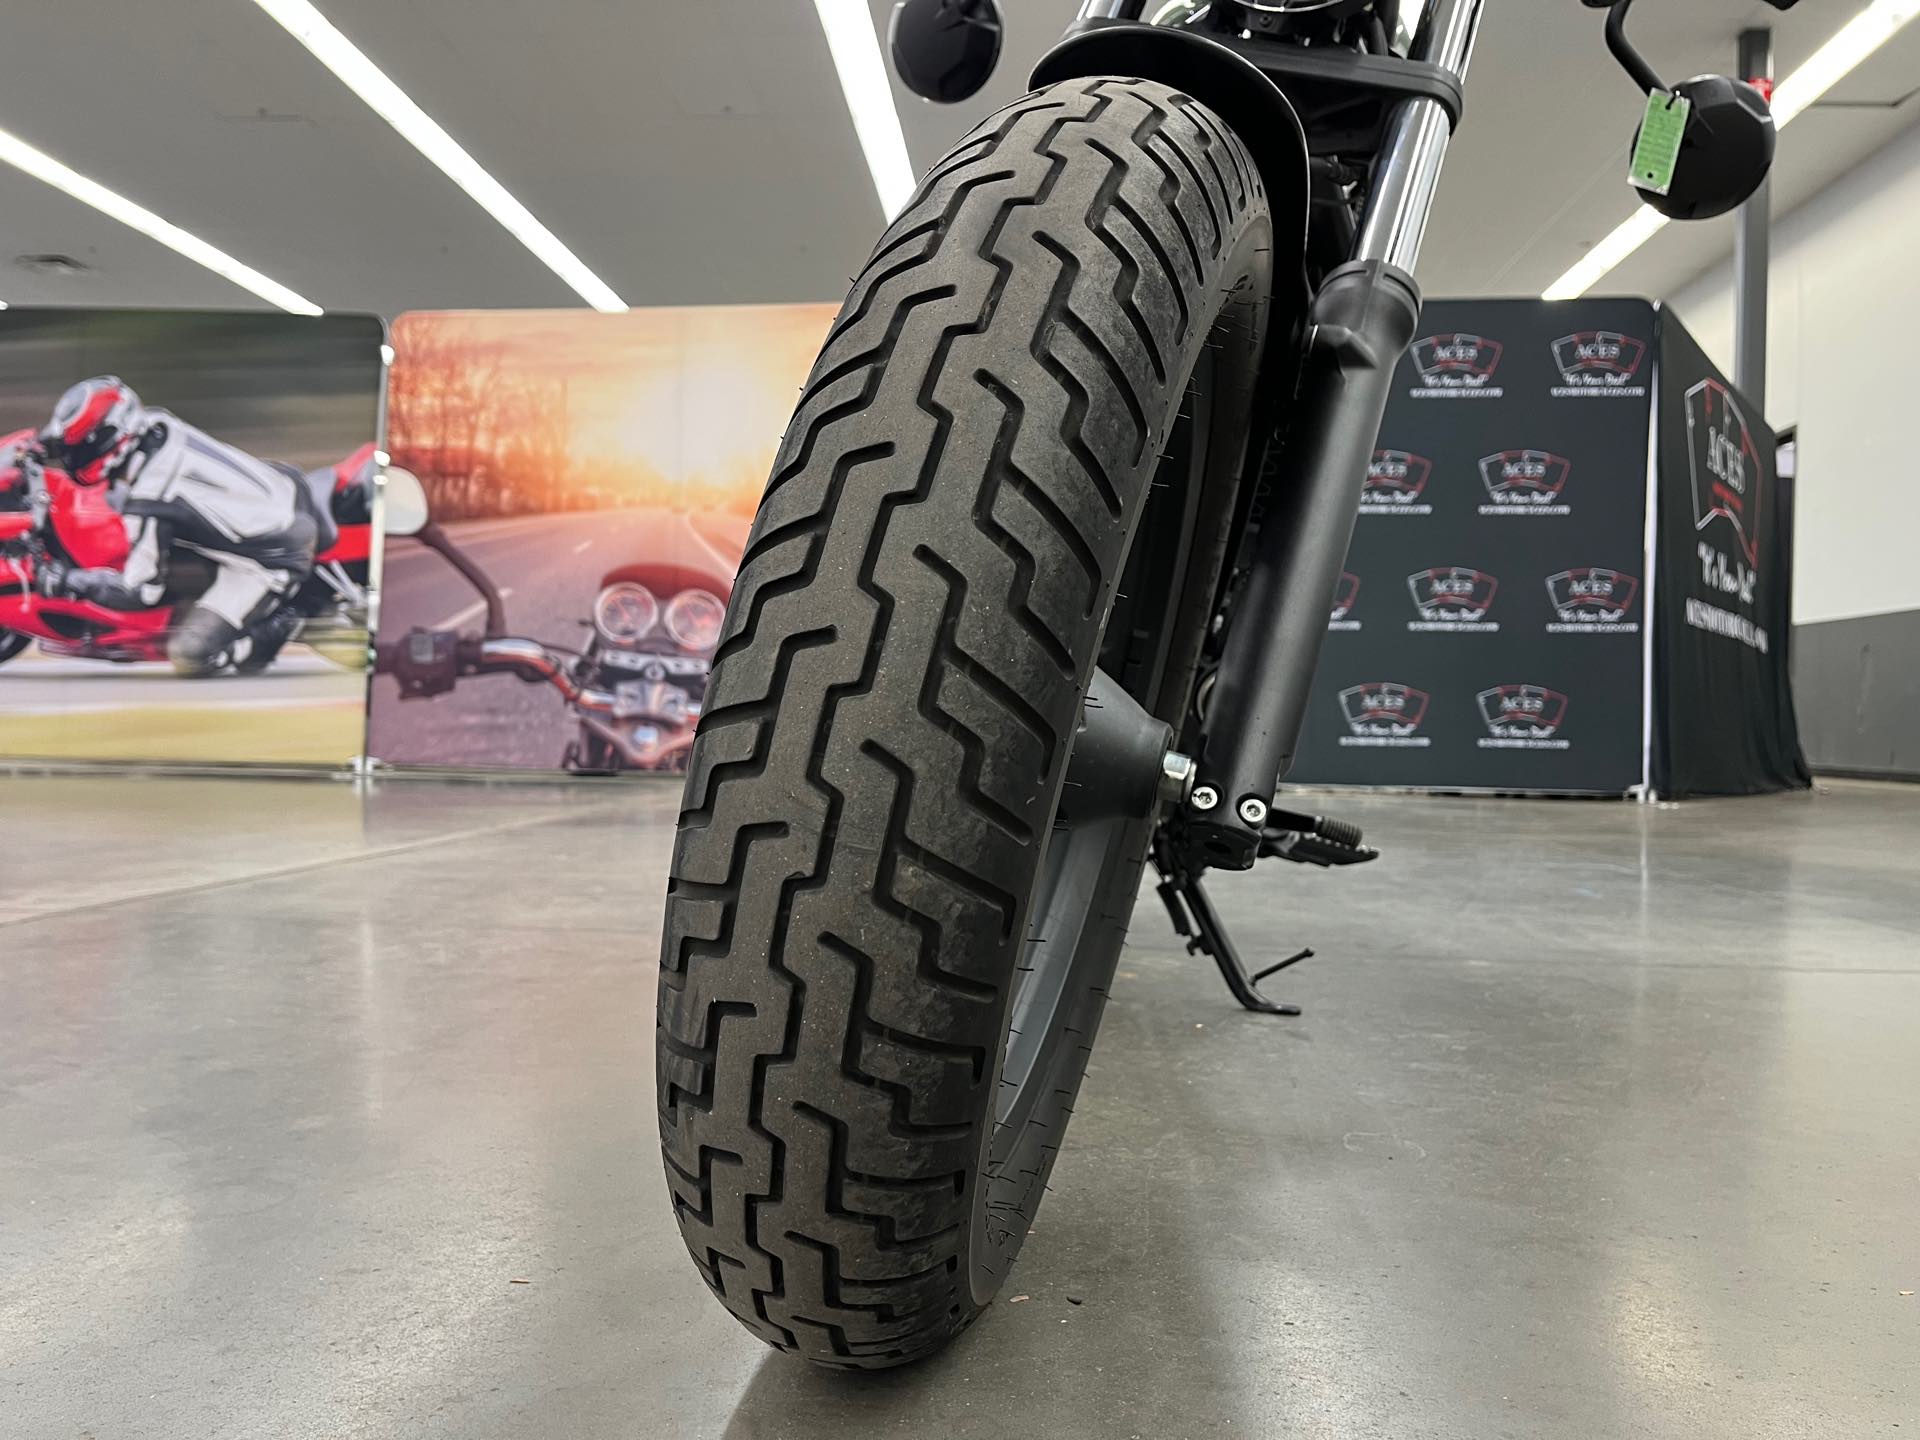 2022 Honda Rebel 500 ABS at Aces Motorcycles - Denver